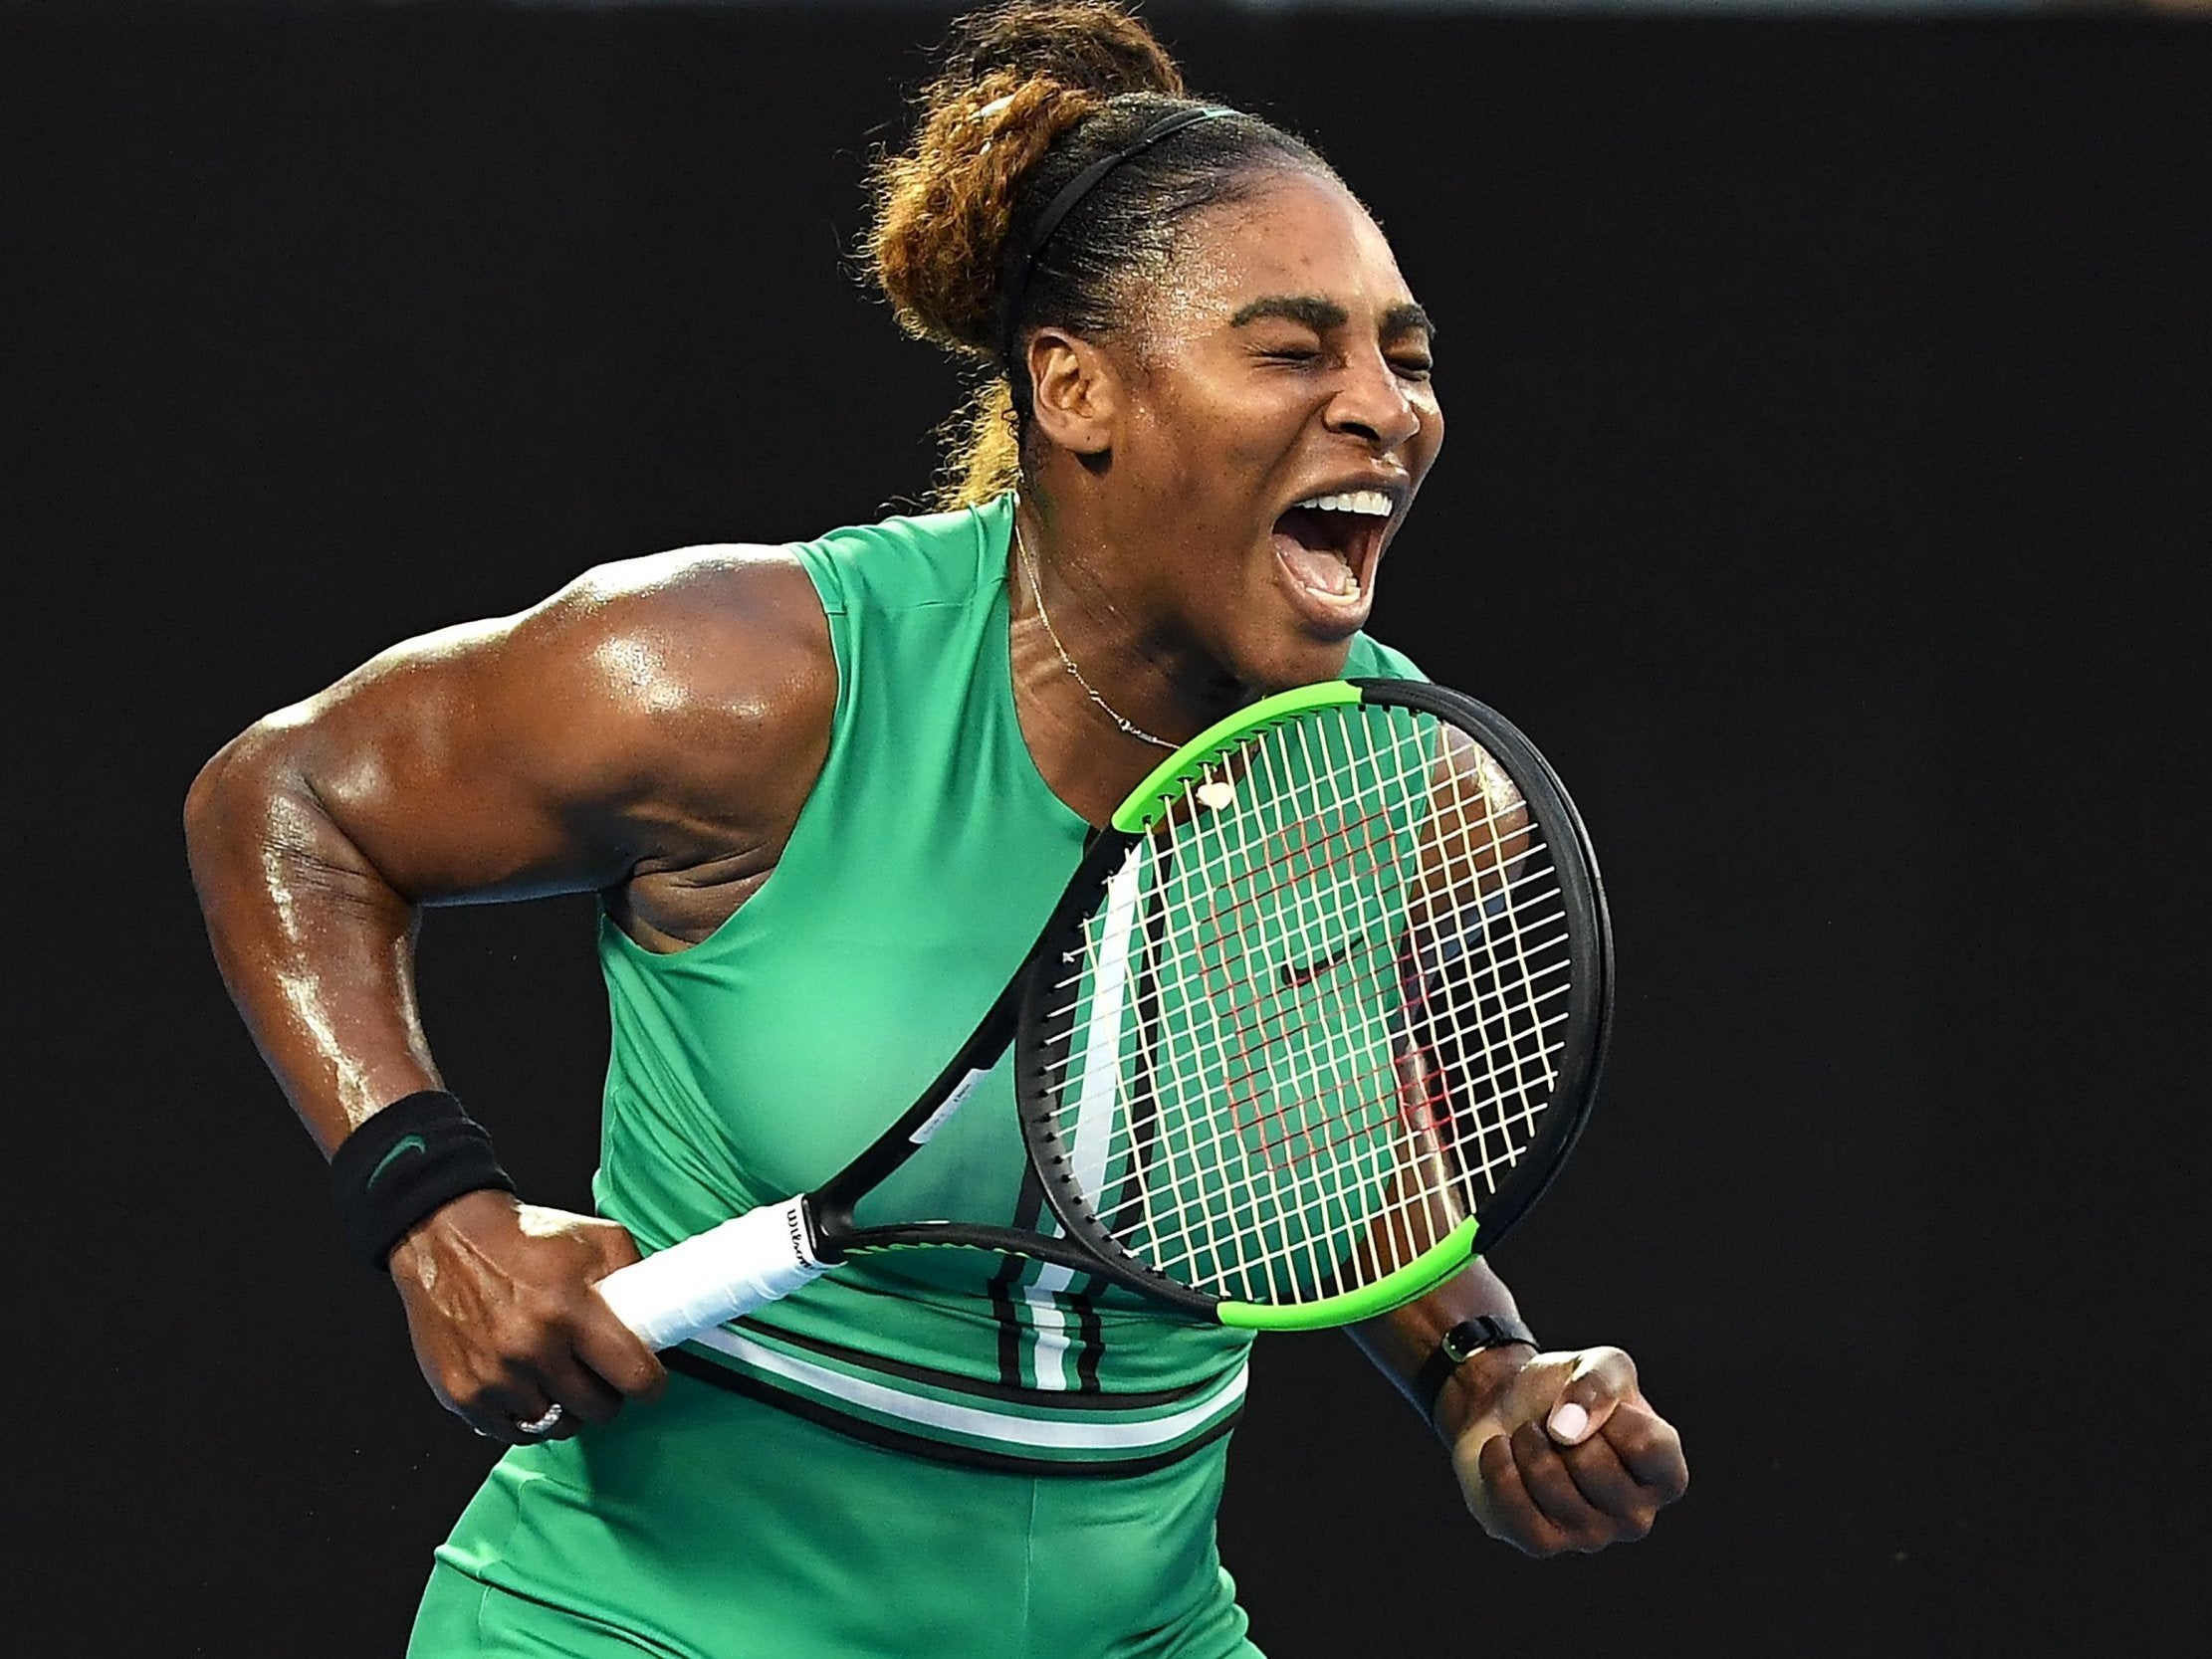 Serena Williams celebrates after defeating world No 1 Simona Halep to reach the Australian Open quarter-finals